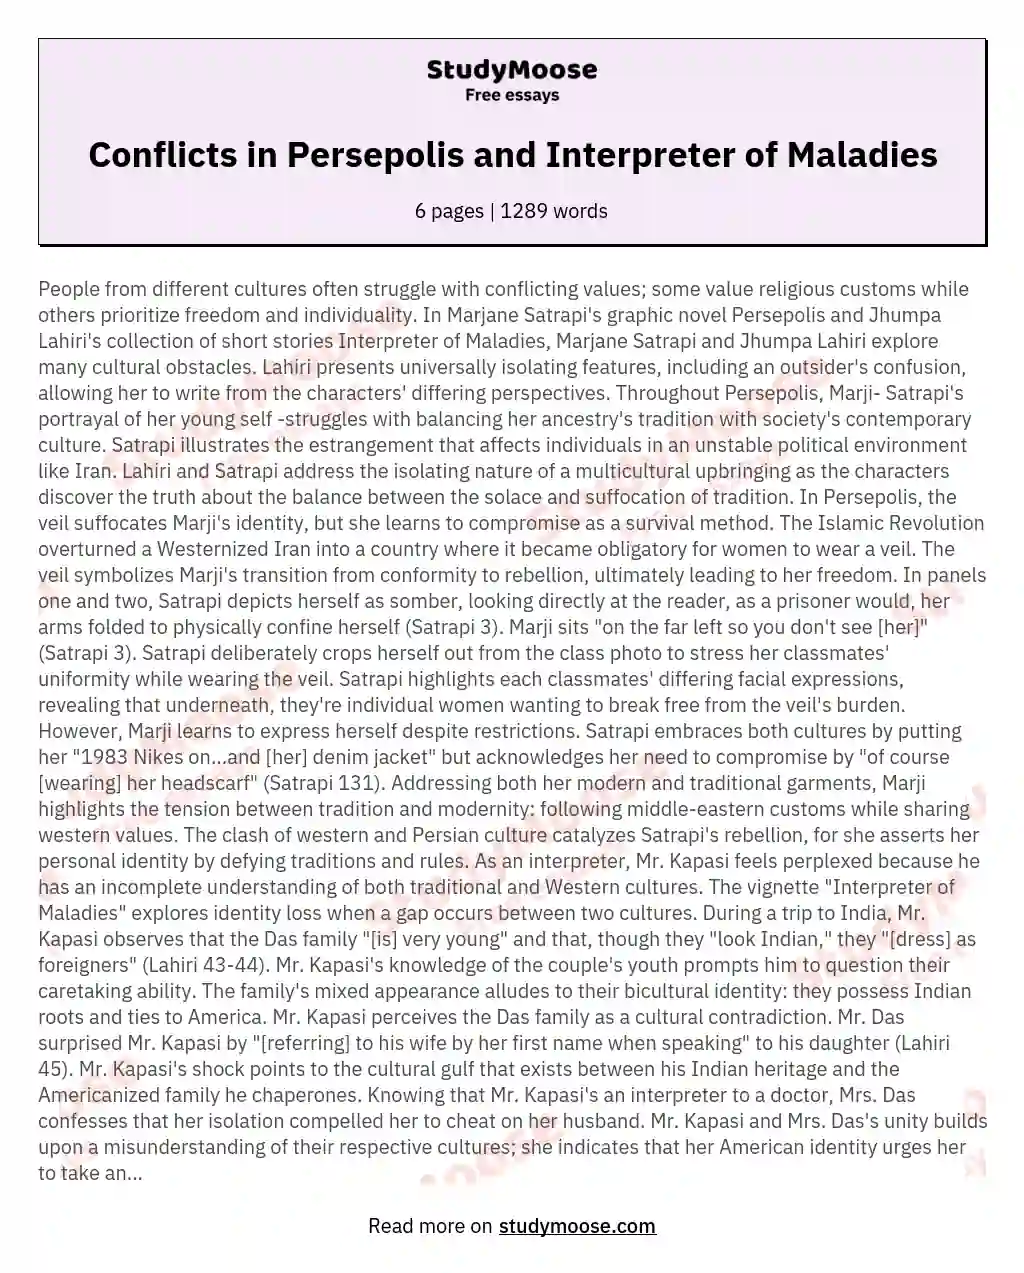 Conflicts in Persepolis and Interpreter of Maladies essay